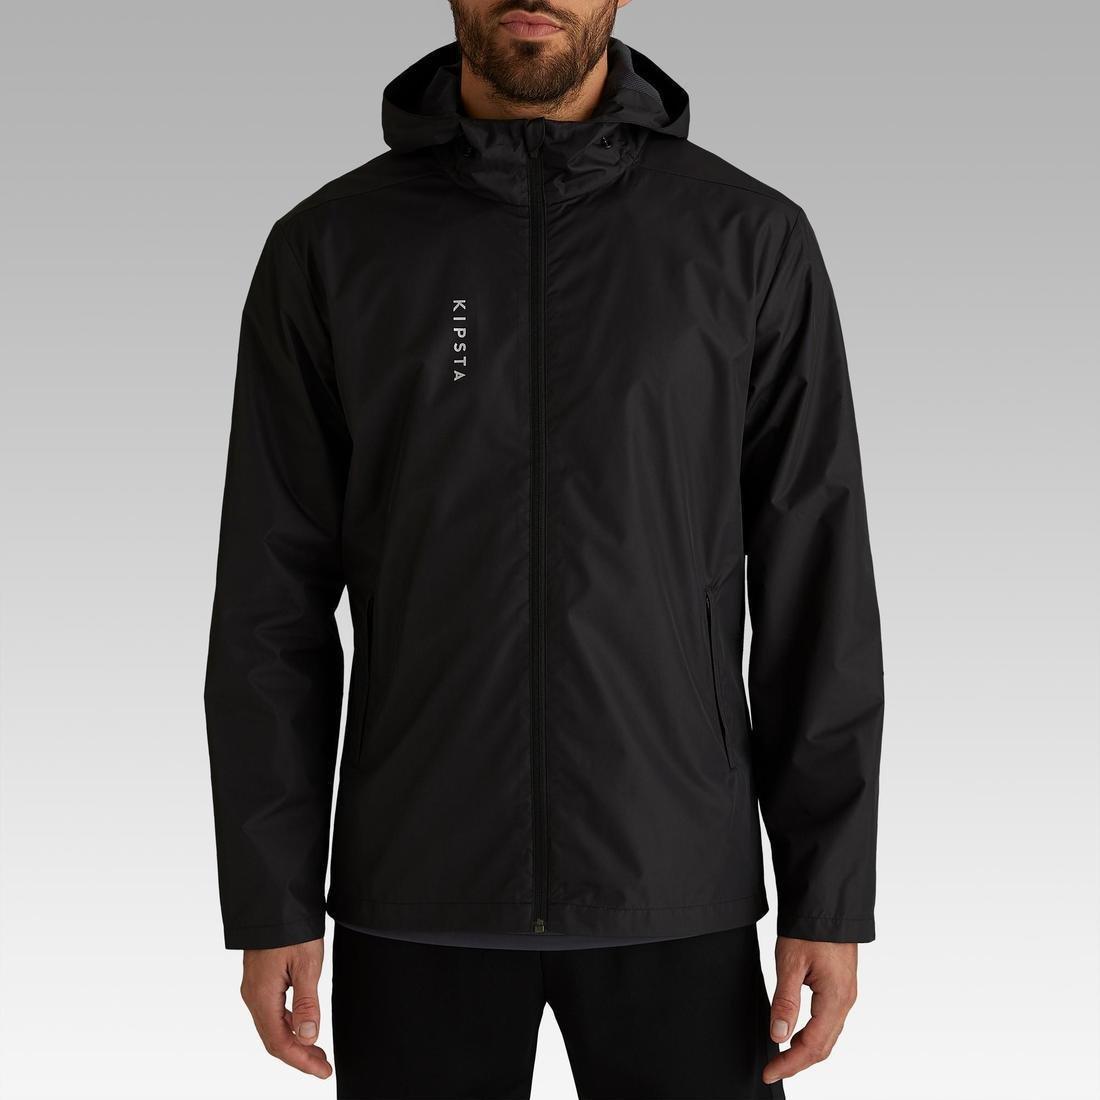 KIPSTA - Men Football Waterproof Jacket-T100, Black